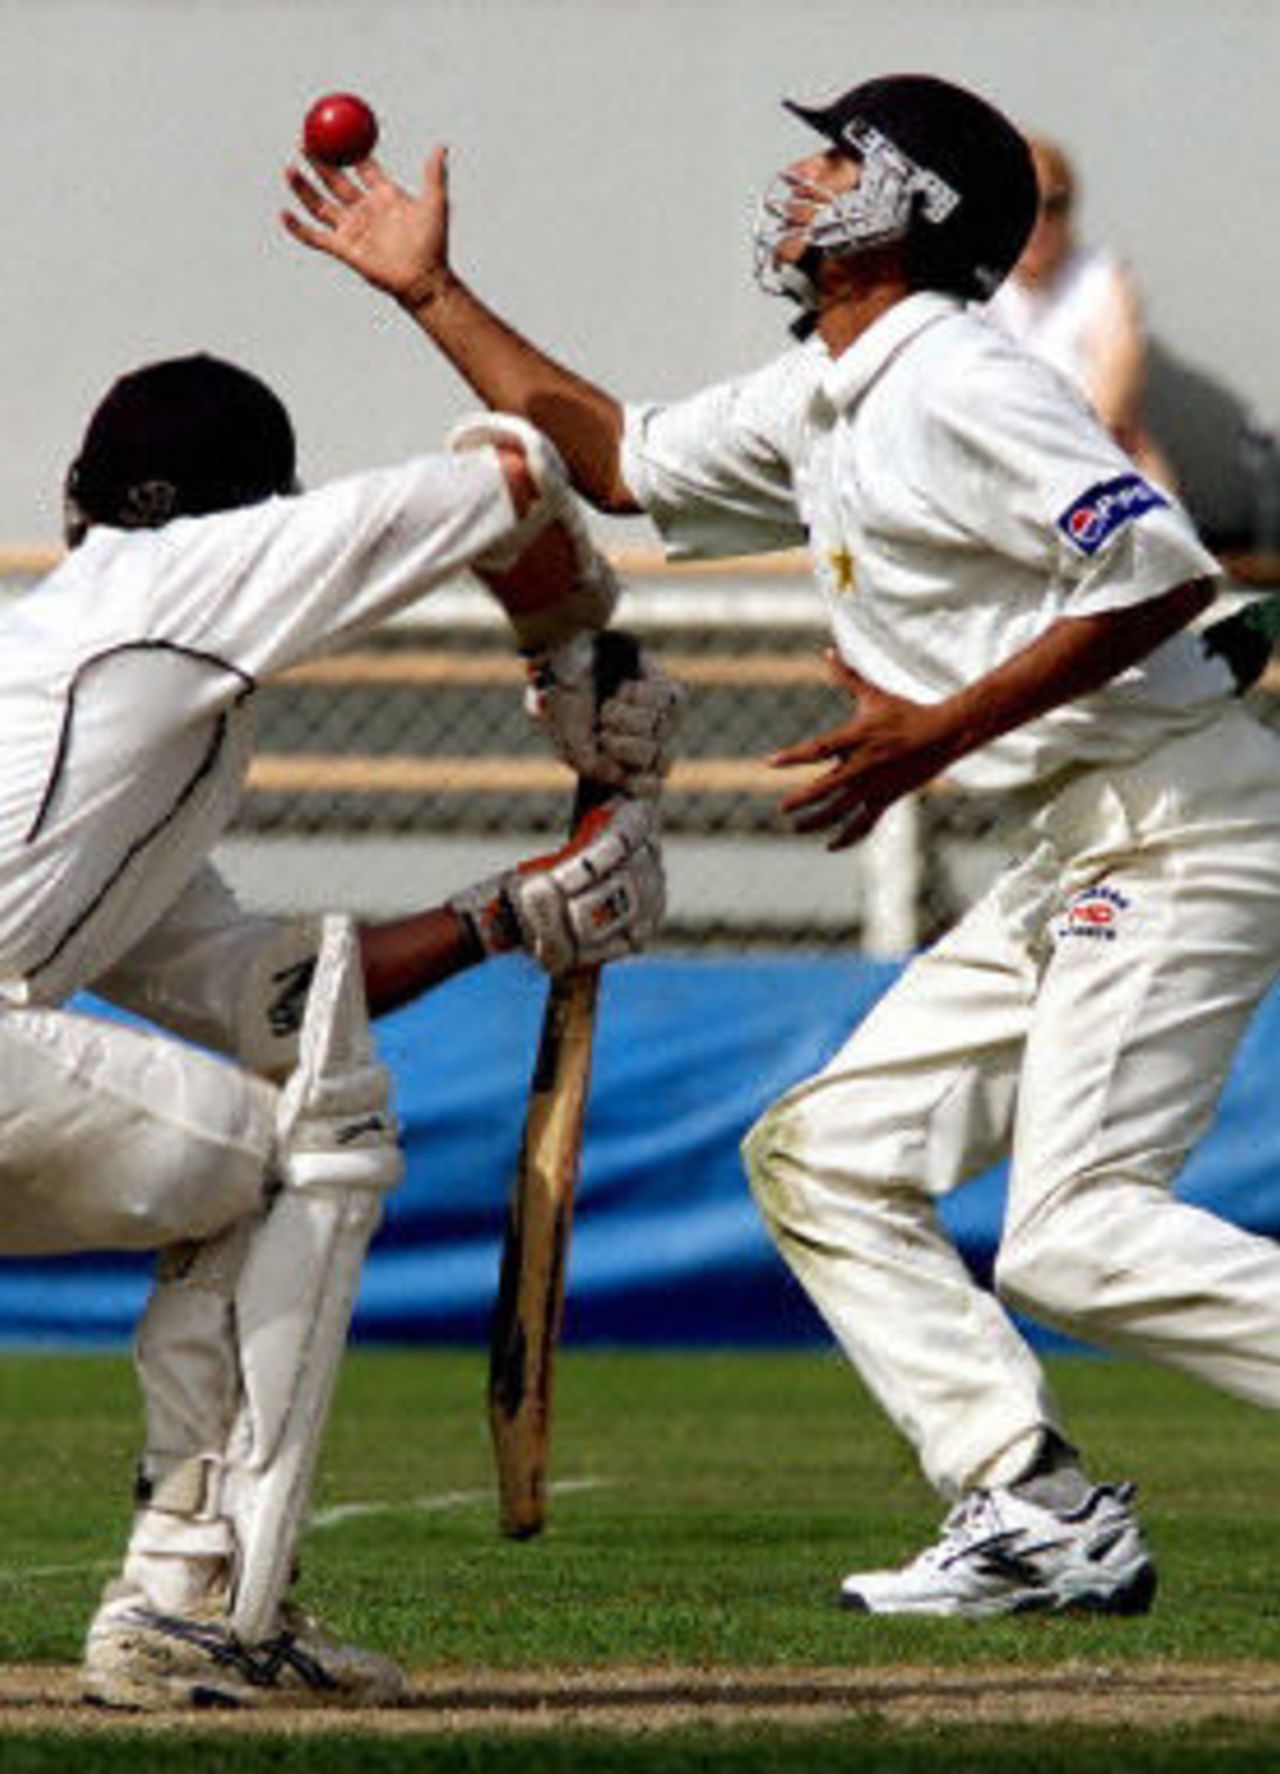 New Zealand batsman Mark Richardson (L) hits the ball to close-in Pakistan fielder Faisal Iqbal, day 5, 2nd Test at Christchurch, 15-19 March 2001